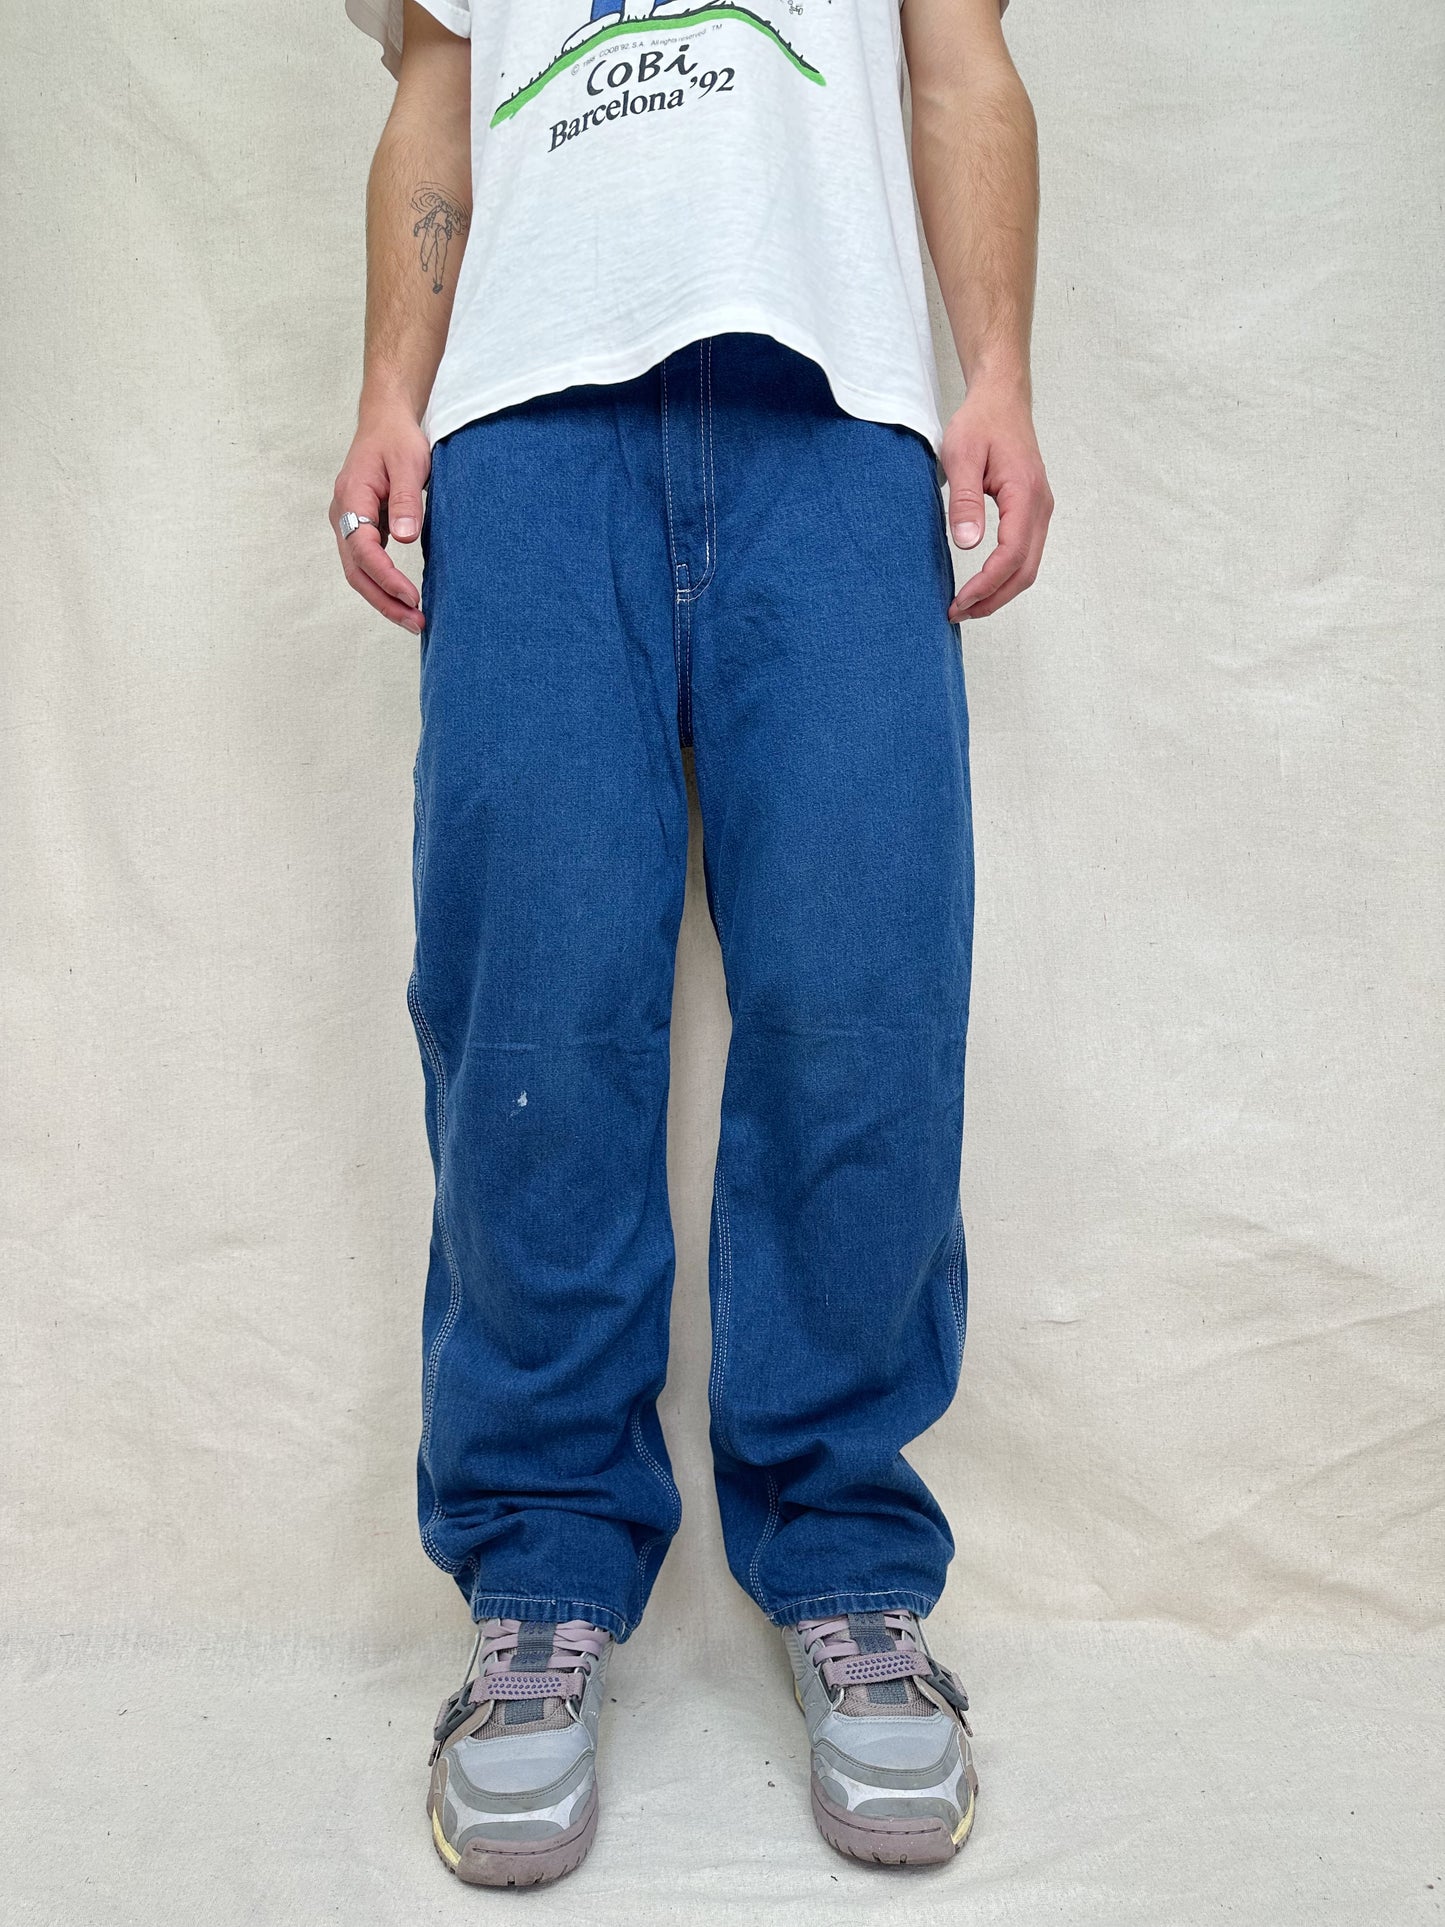 90's Carhartt Vintage Carpenter Jeans Size 32x31